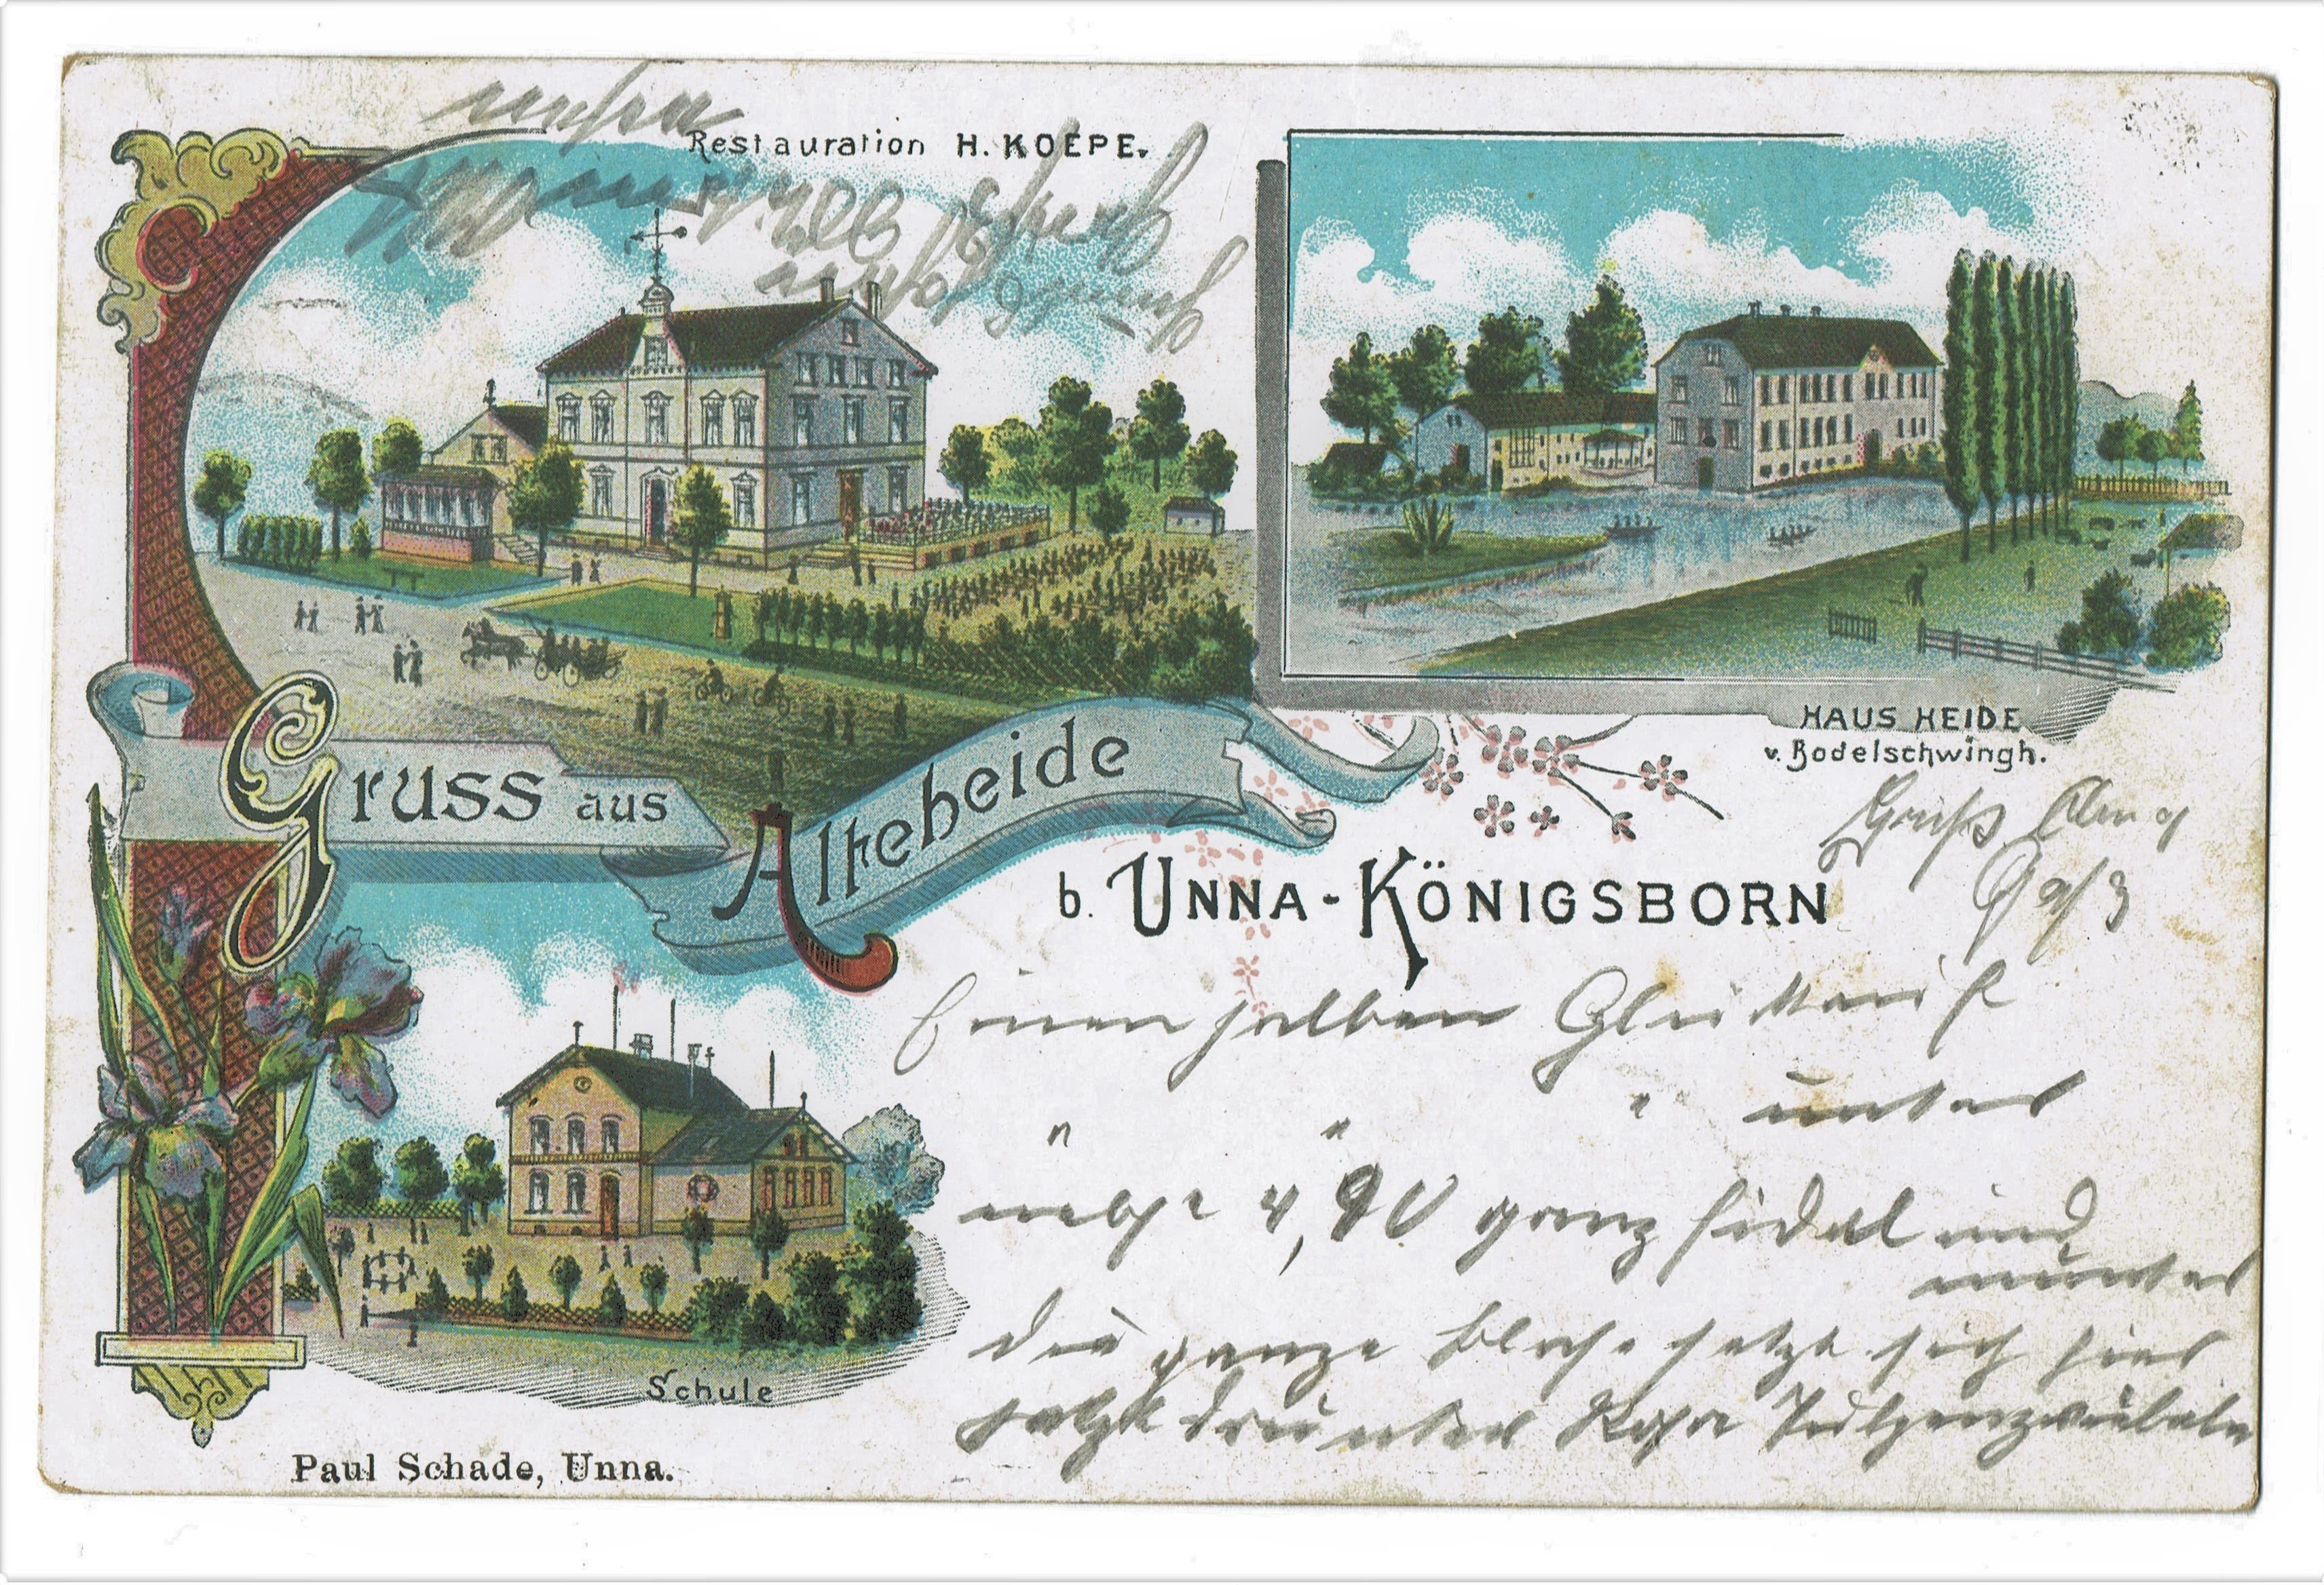 Postkarte "Gruß aus Alteheide b. Unna-Königsborn" (Hellweg-Museum Unna CC BY-NC-SA)